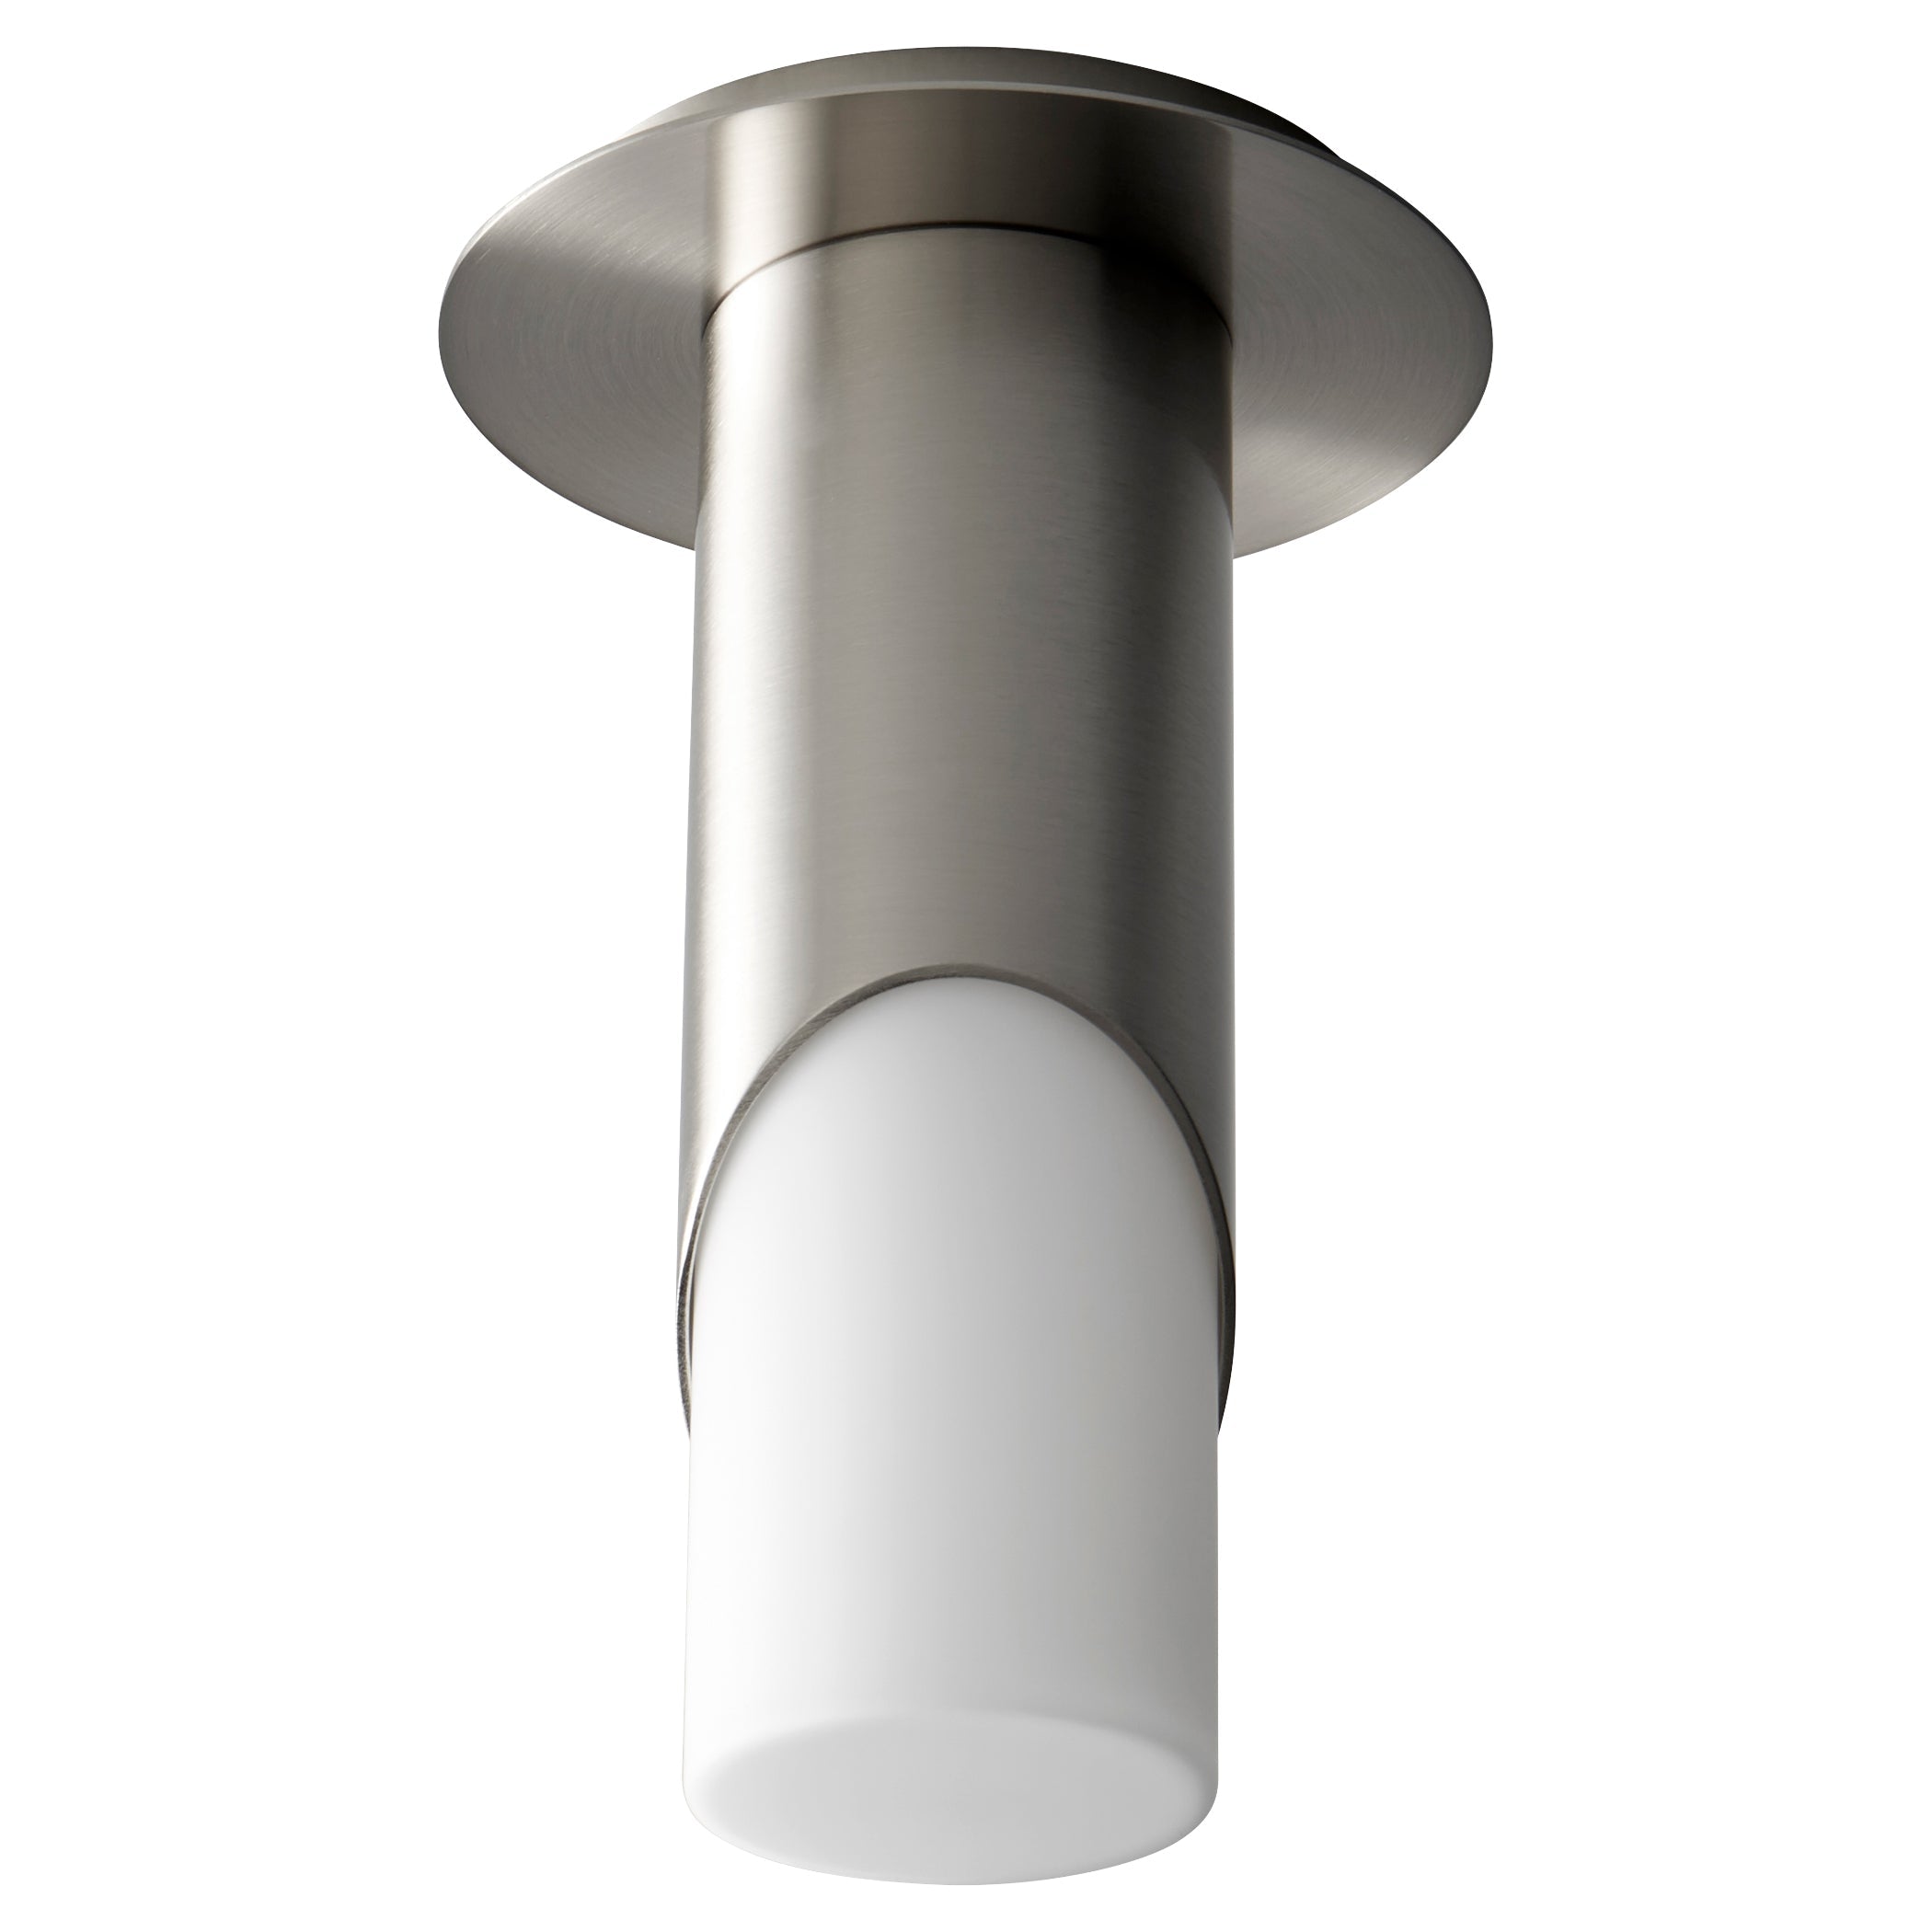 Oxygen Ellipse 3-353-124 Modern Cylinder Ceiling Mount Light Fixture - Satin Nickel